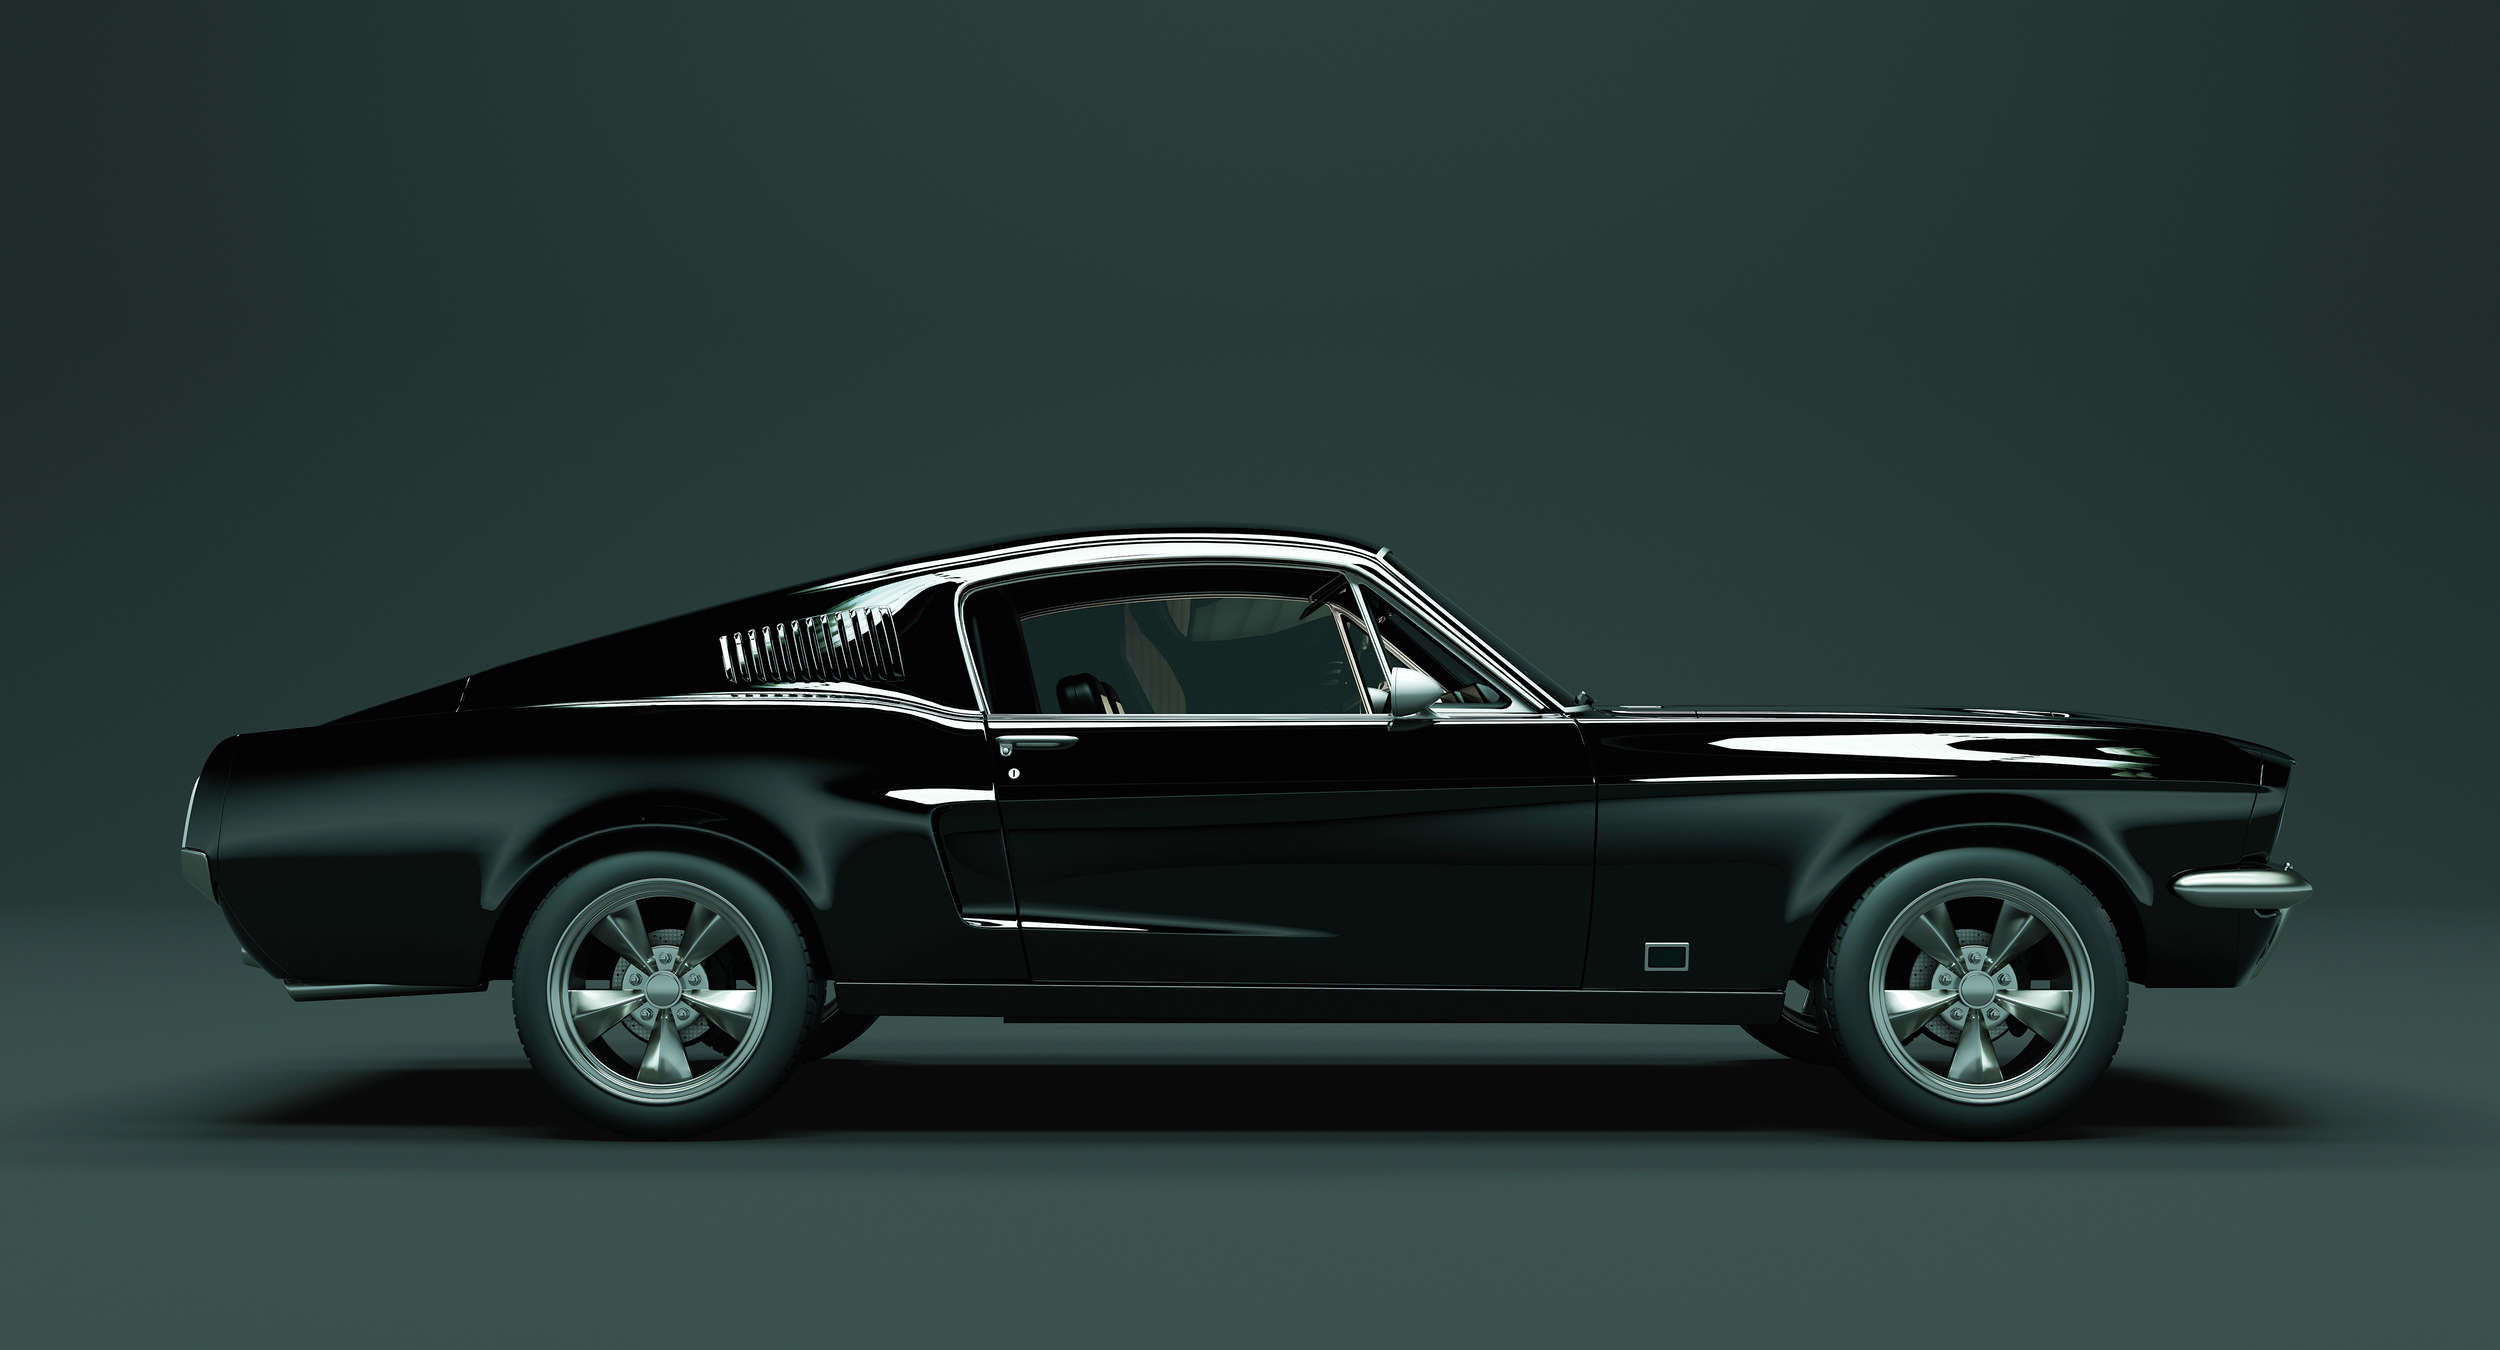             Mustang 1 - Fotomurali, vista laterale Mustang, Vintage - Blu, Nero | Pile liscio opaco
        